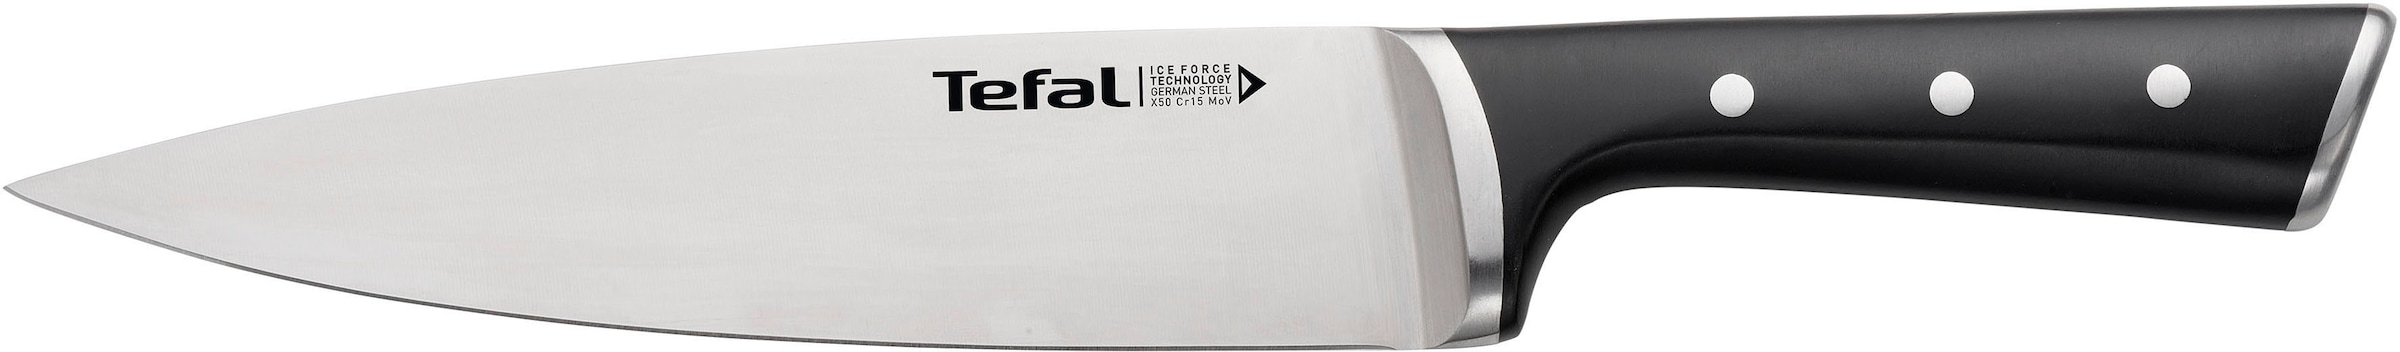 Tefal Pfannen-Set »Unlimited Ice Force«, Aluminium, (Set, 4 tlg., je 1 Bratpfanne Ø 20/24/28 cm, Kochmesser 20 cm), kratzfeste Antihaftversiegelung, Thermo-Signal, inkl. Kochmesser